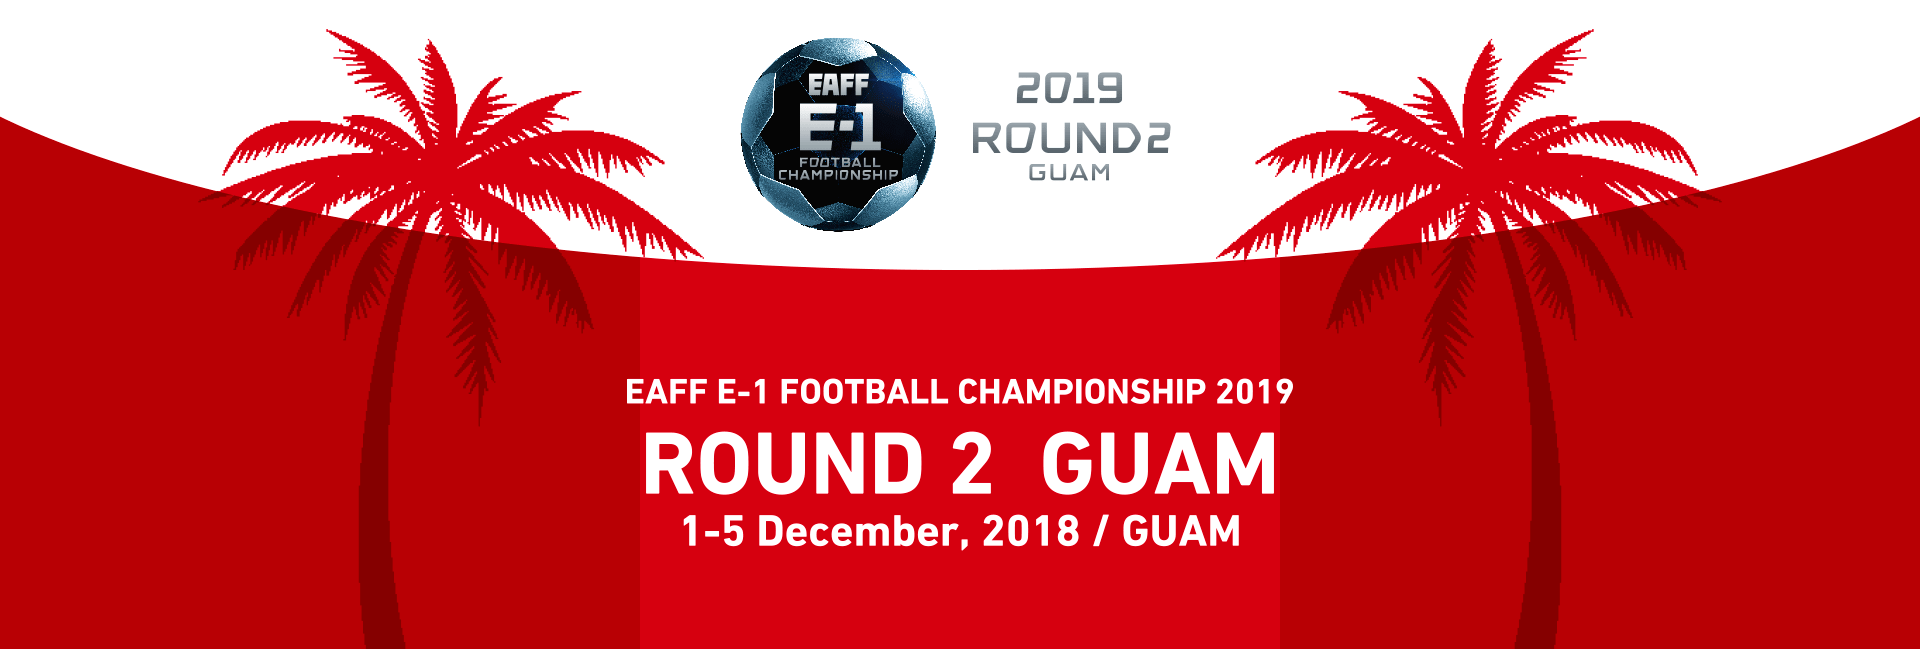 EAFF E-1 Football Championship 2019 Preliminary Round 2 Guam